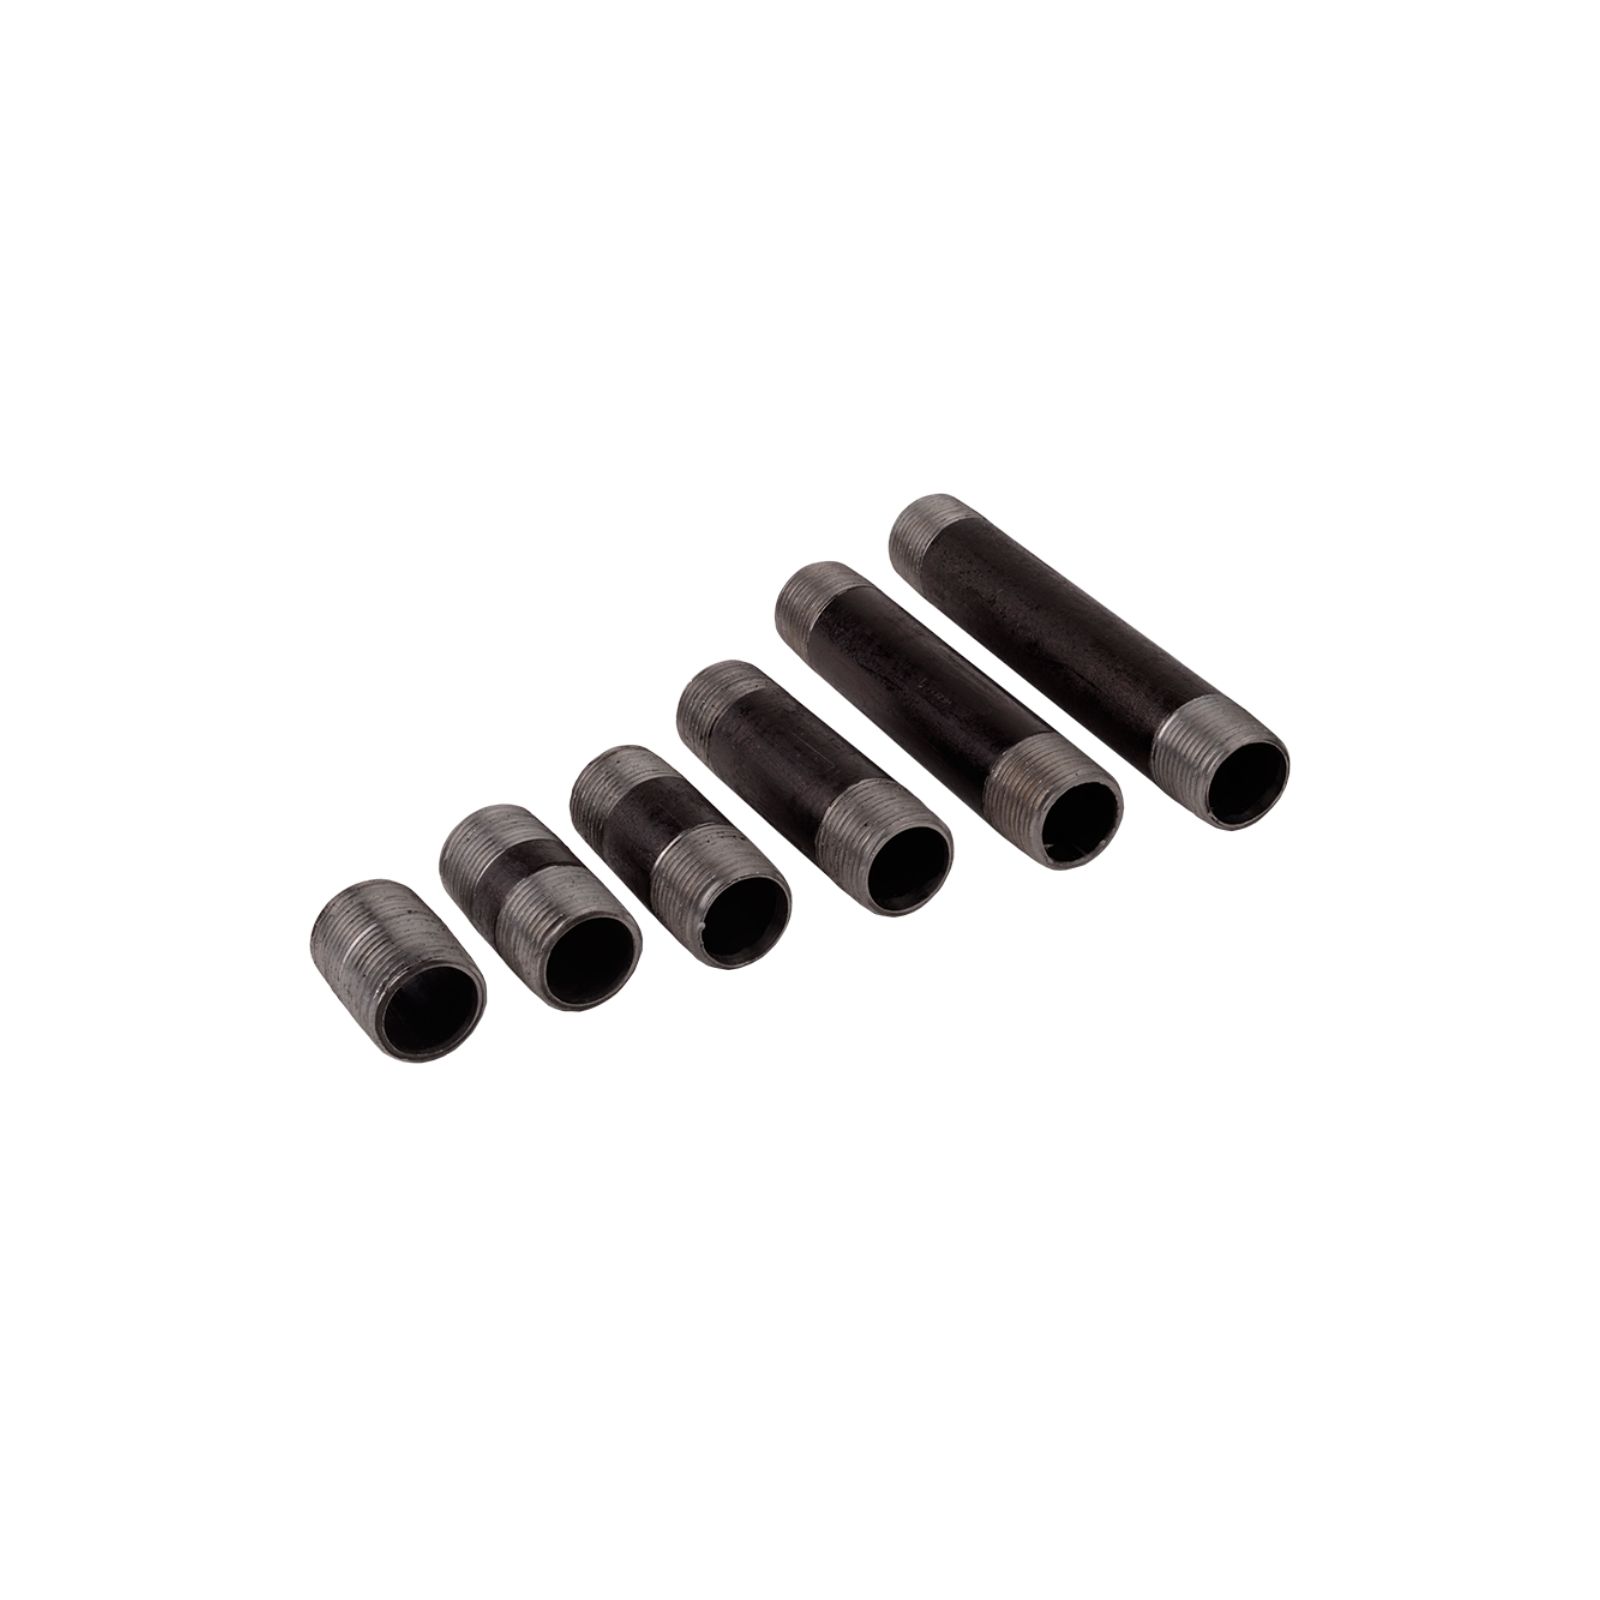 DiversiTech BPN-A34 - Black Steel Welded Nipples 3/4" Assortment Pack of Close Thru 6", Pack of 66